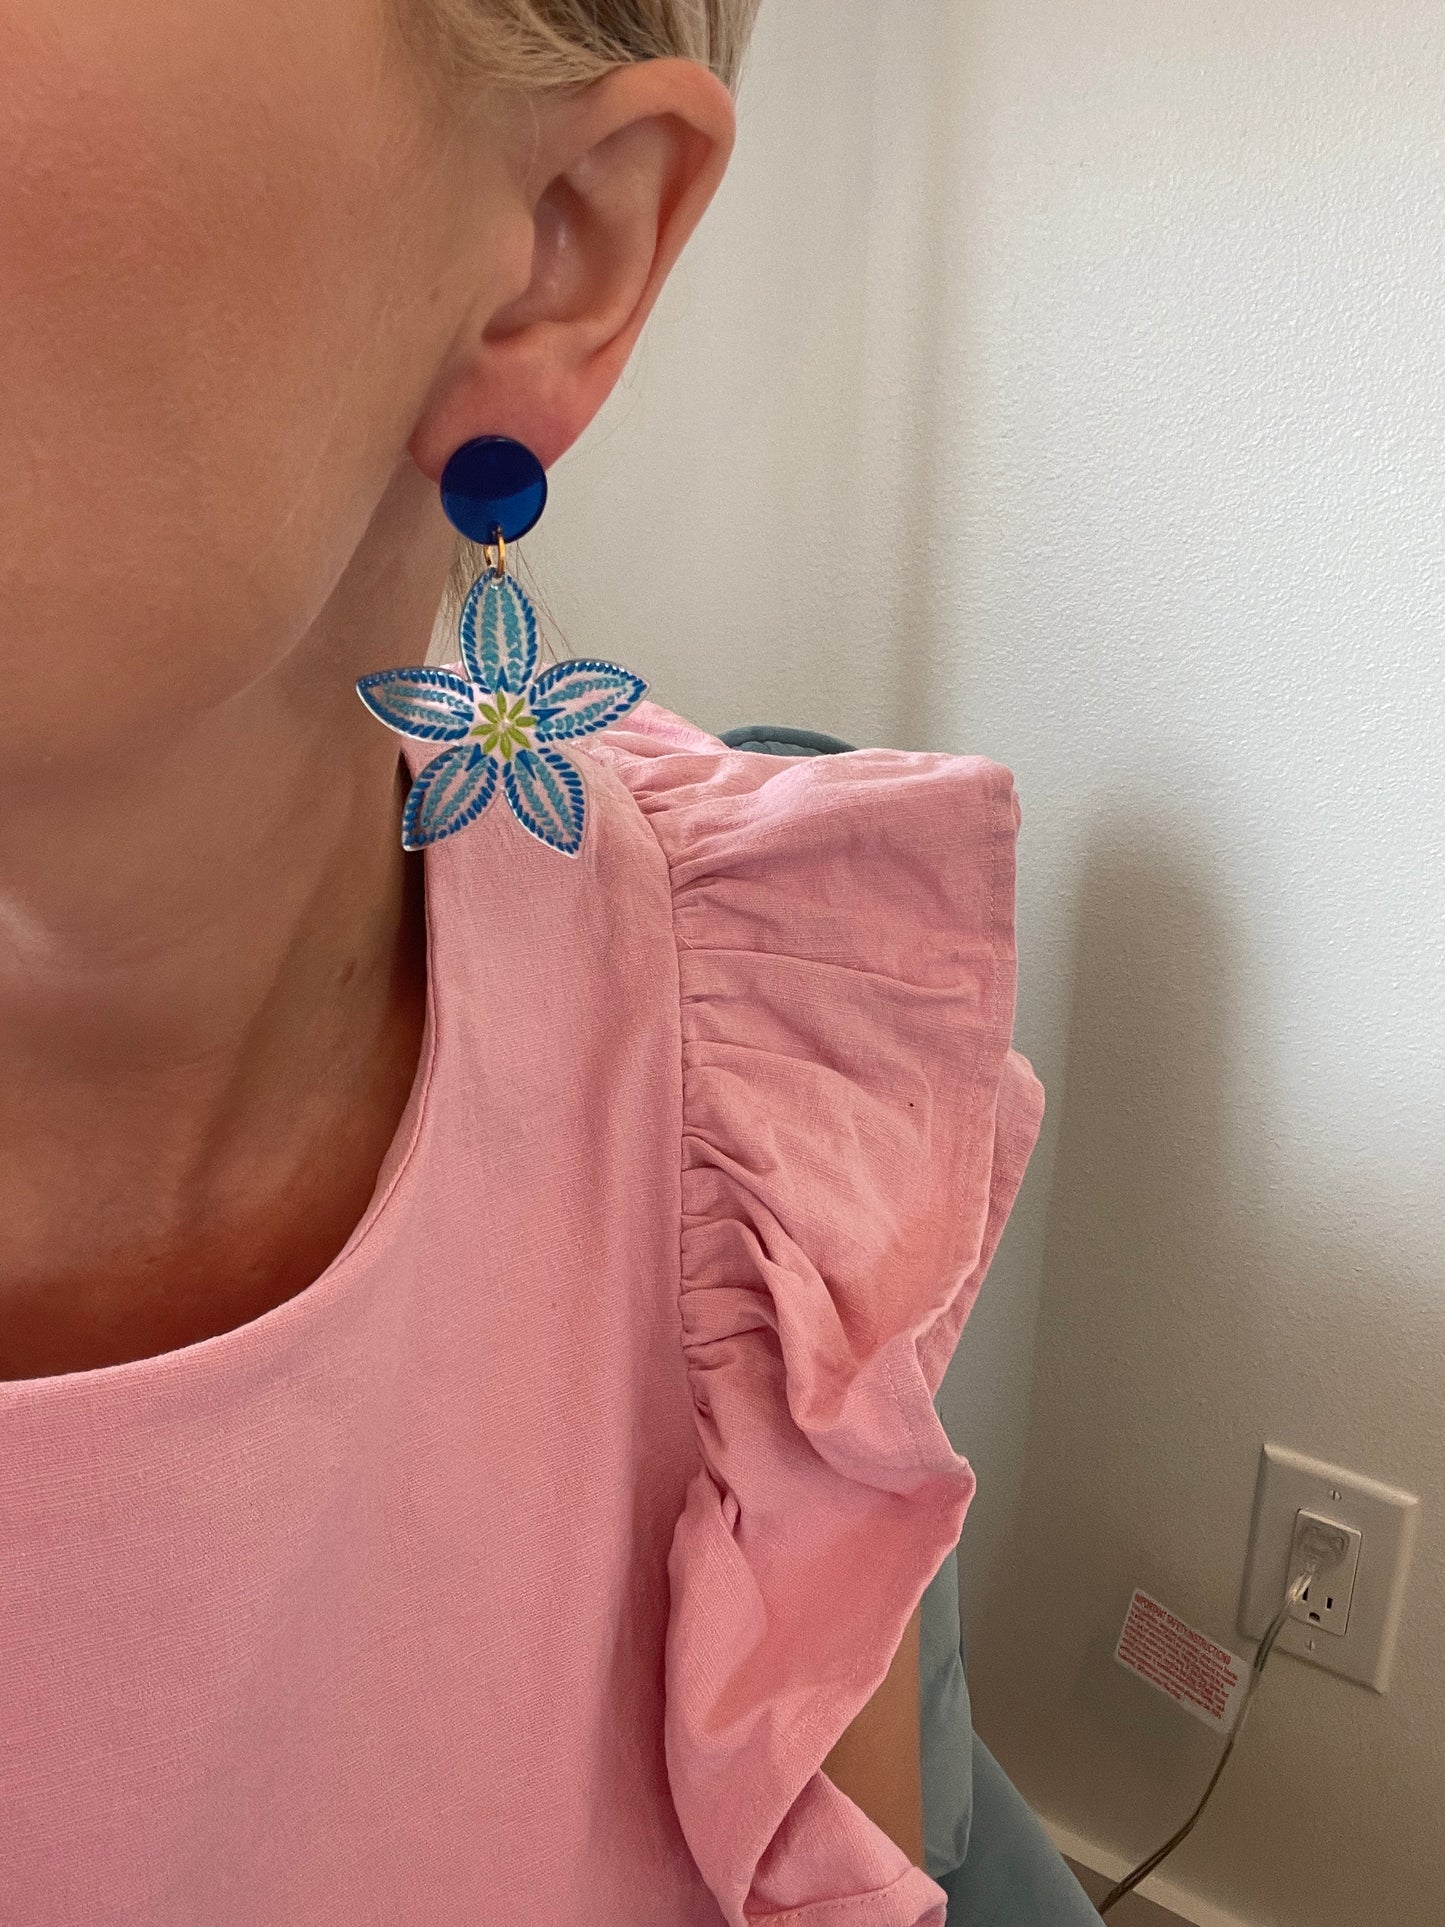 Acrylic Floral Earrings - Blue